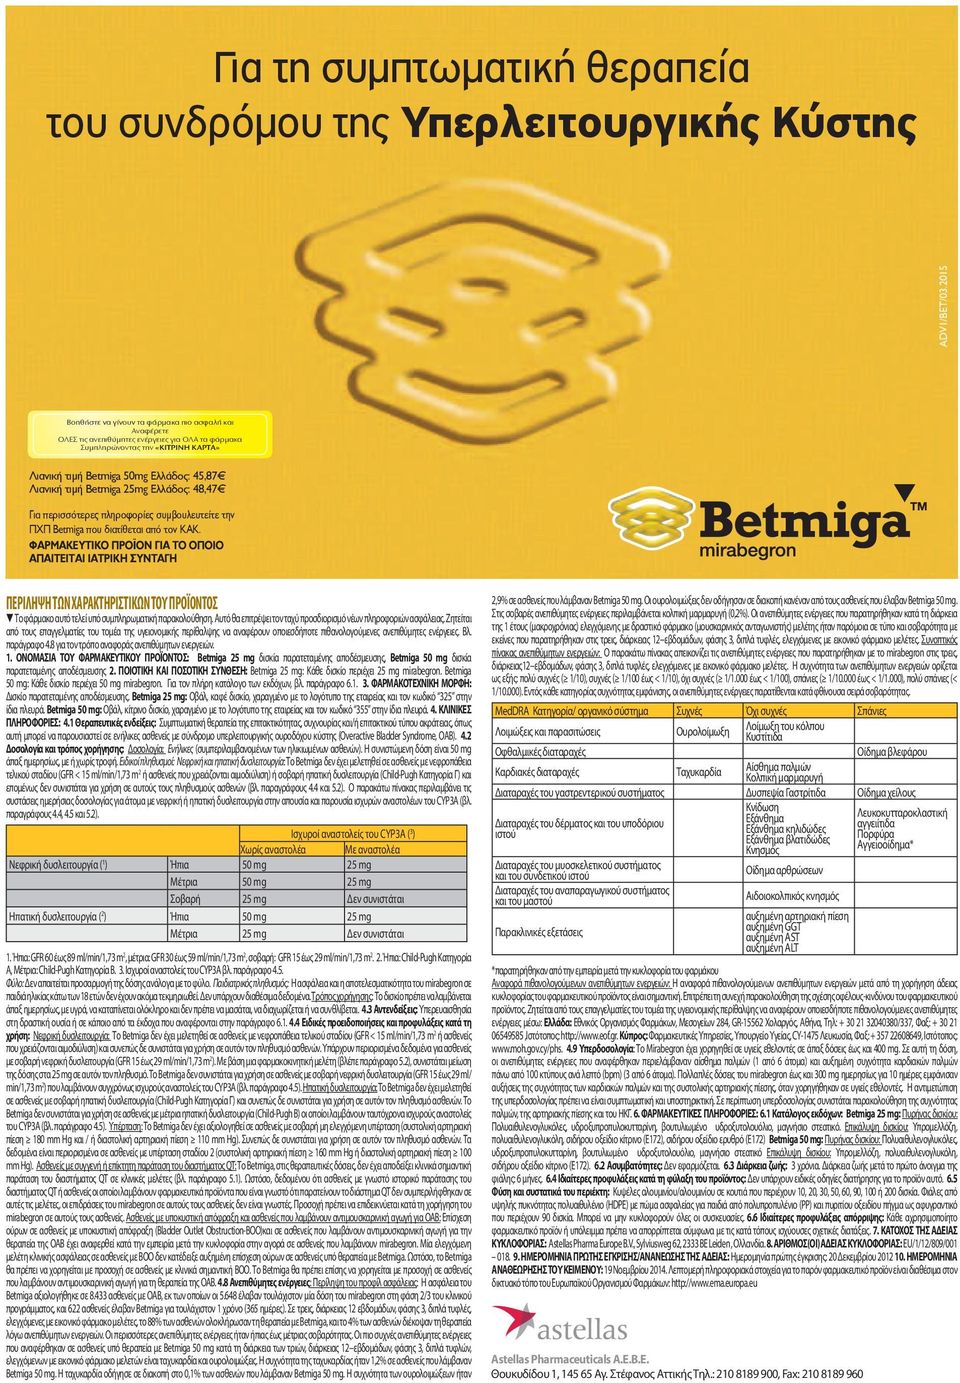 Betmiga 25mg Ελλάδος: 48,47 Για περισσότερες πληροφορίες συμβουλευτείτε την ΠΧΠ Betmiga που διατίθεται από τον ΚΑΚ.